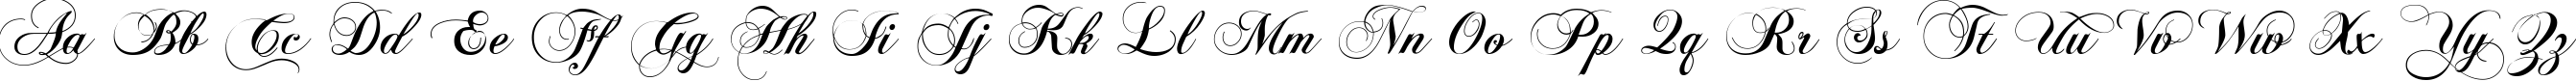 Пример написания английского алфавита шрифтом Chopin Script